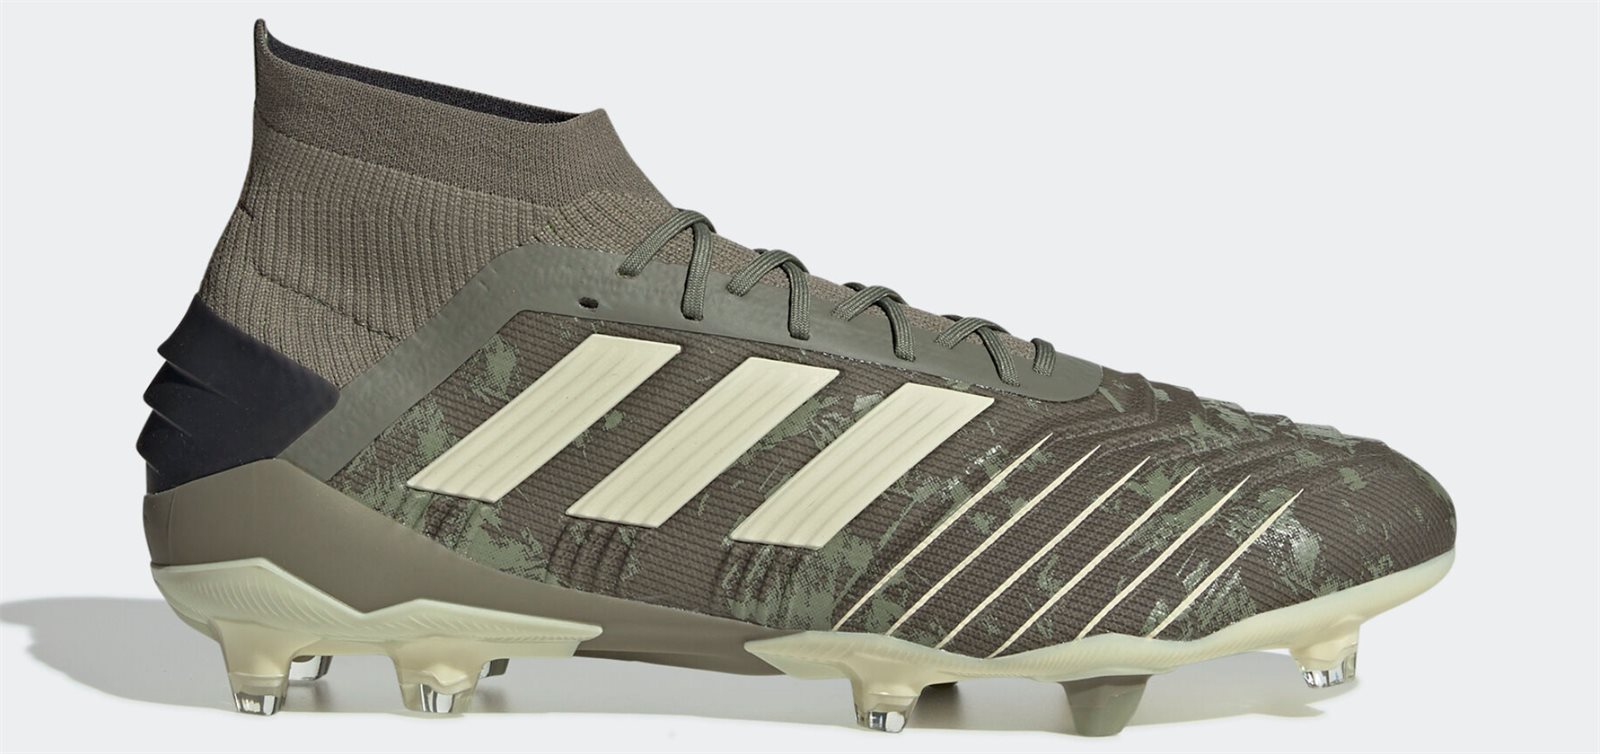 adidas Predator 19.1 Football Boots